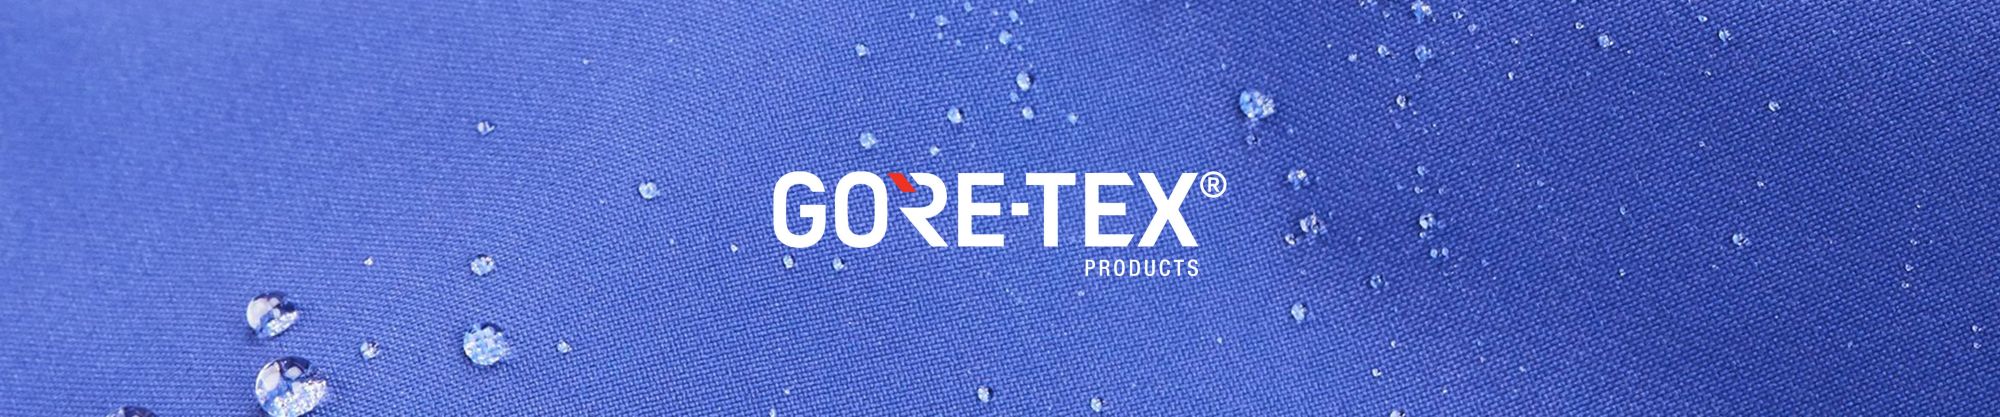 goretex products